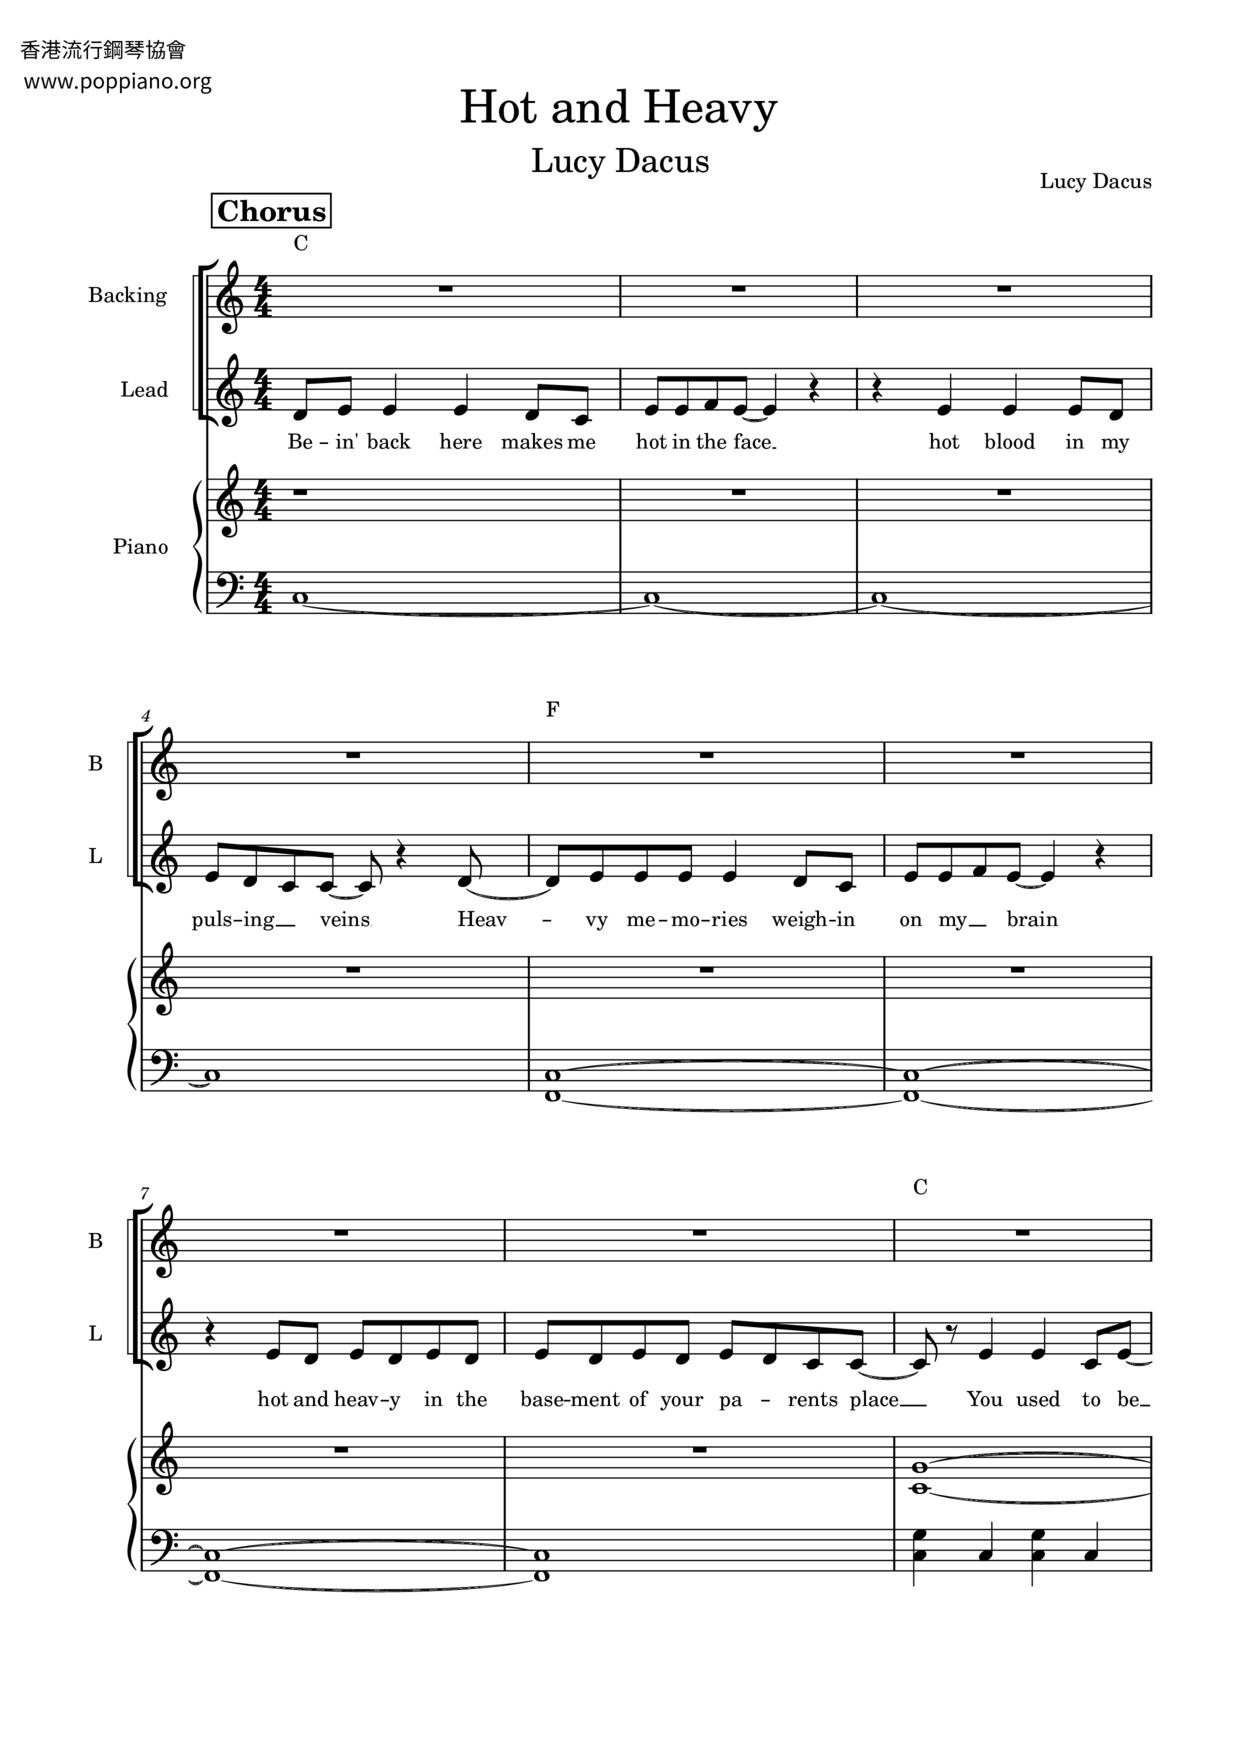 Lucy Dacus - Night Shift (Piano Cover) [Sheet Music] 